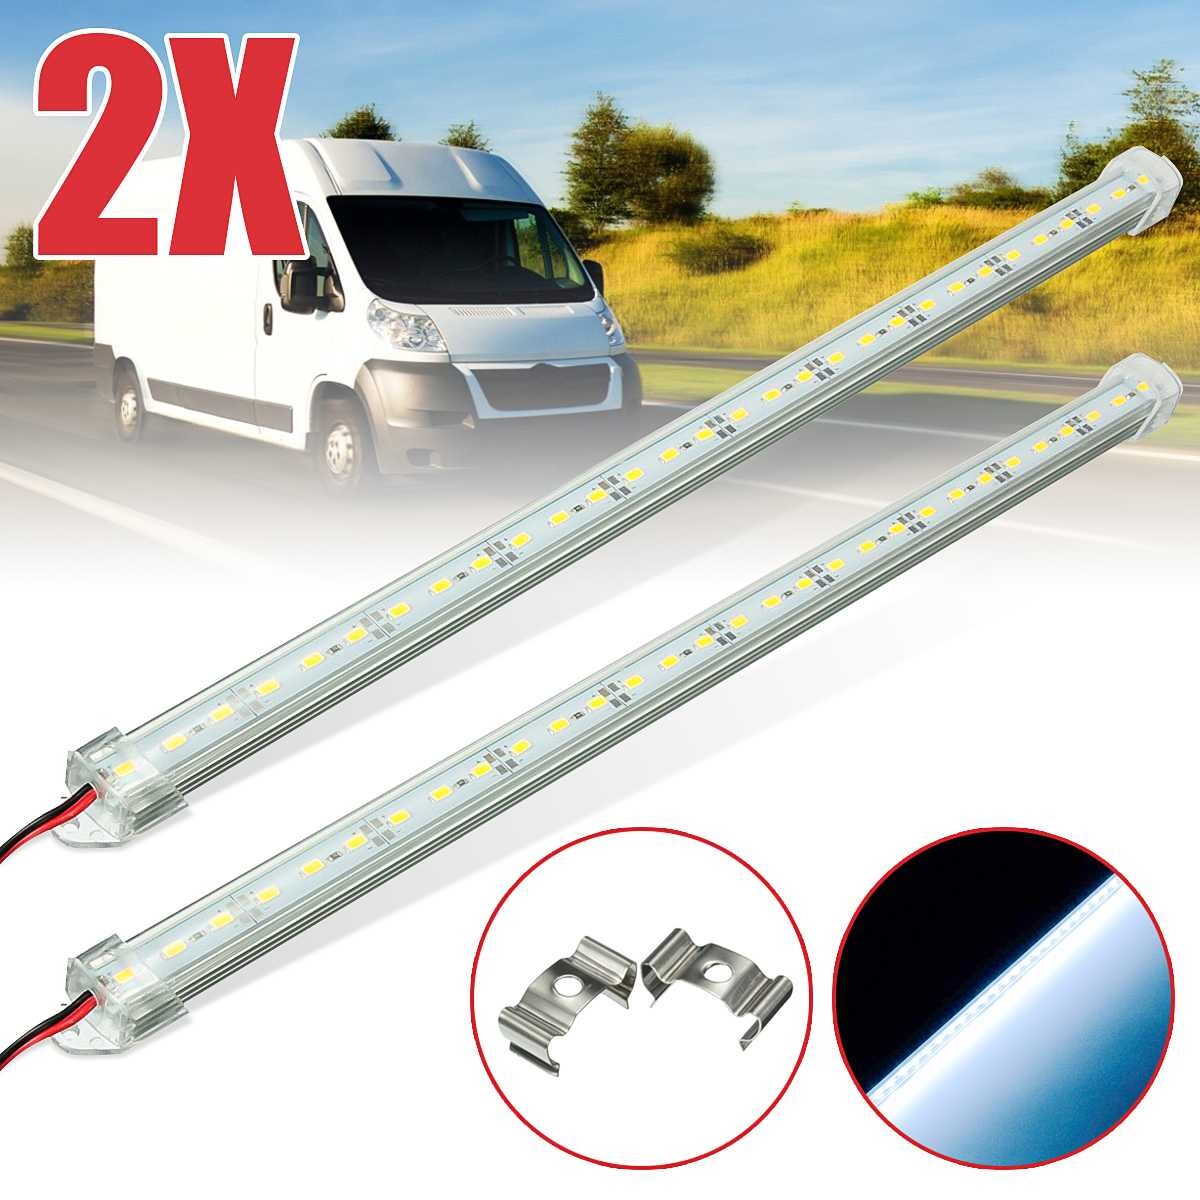 12V 40cm Car LED SMD Interior Light Strip Bar Lamp Van Caravan Truck Trailer 